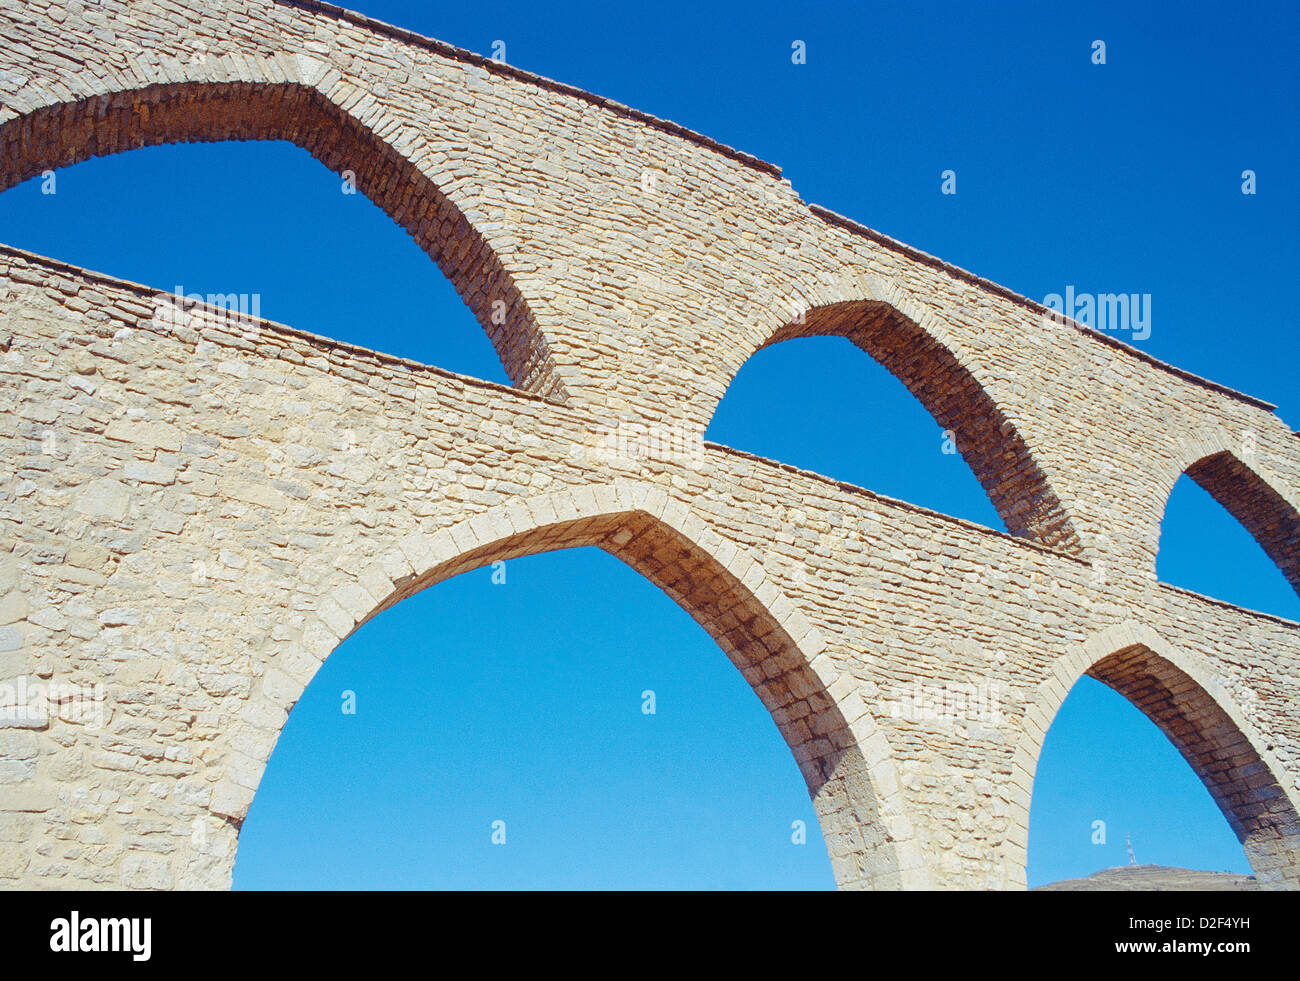 Aqueduct. Morella, Castellon province, Comunidad Valenciana, Spain. Stock Photo